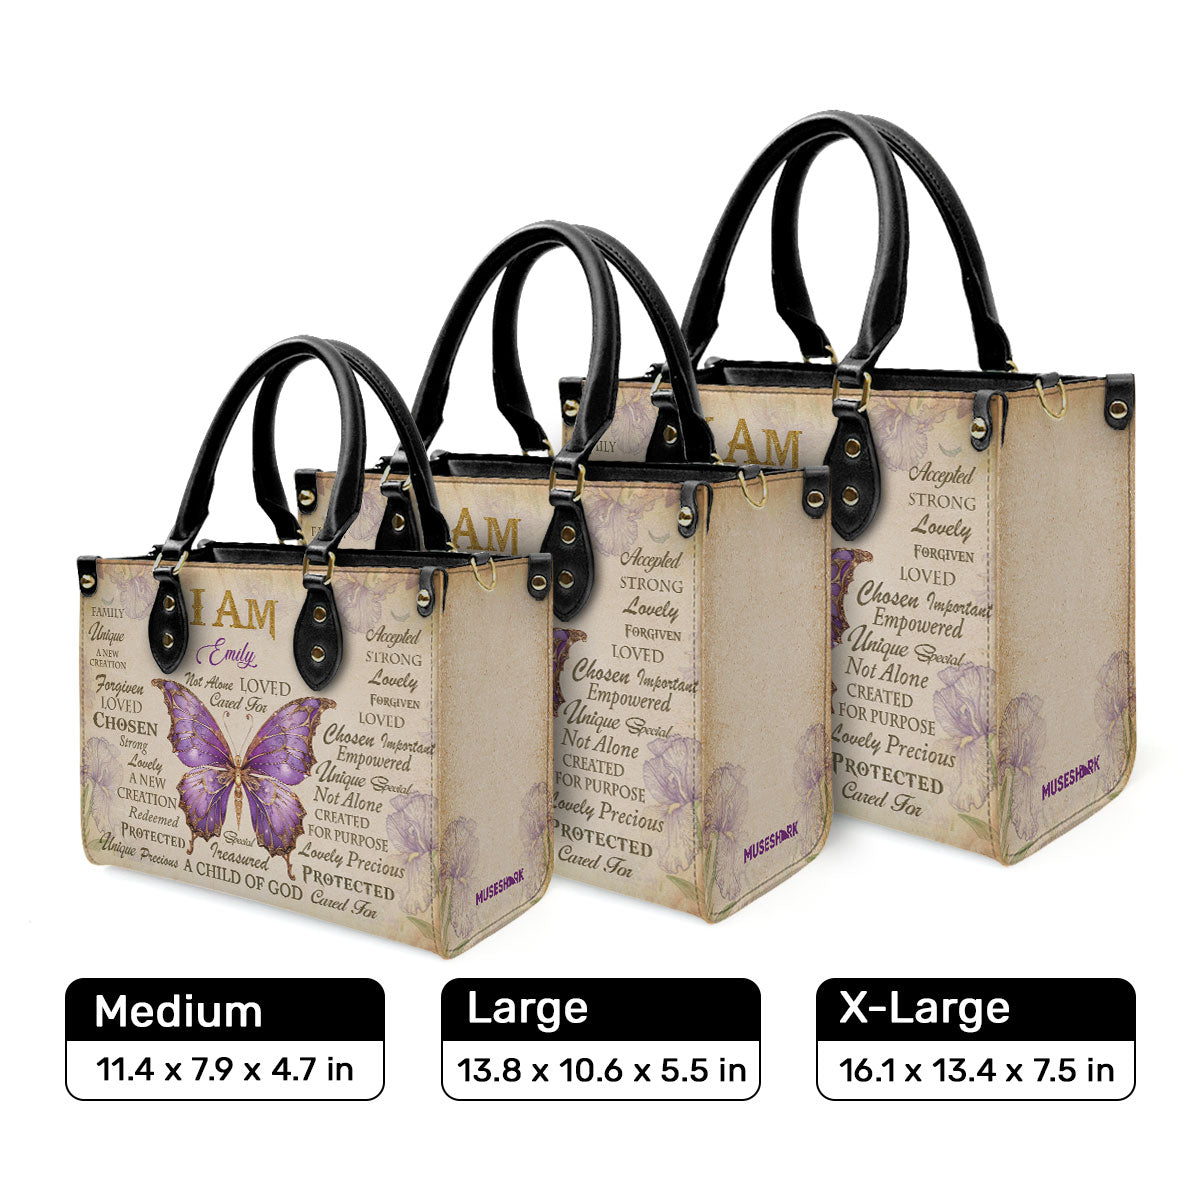 I Am Not Alone - Personalized Leather Handbag MSM48